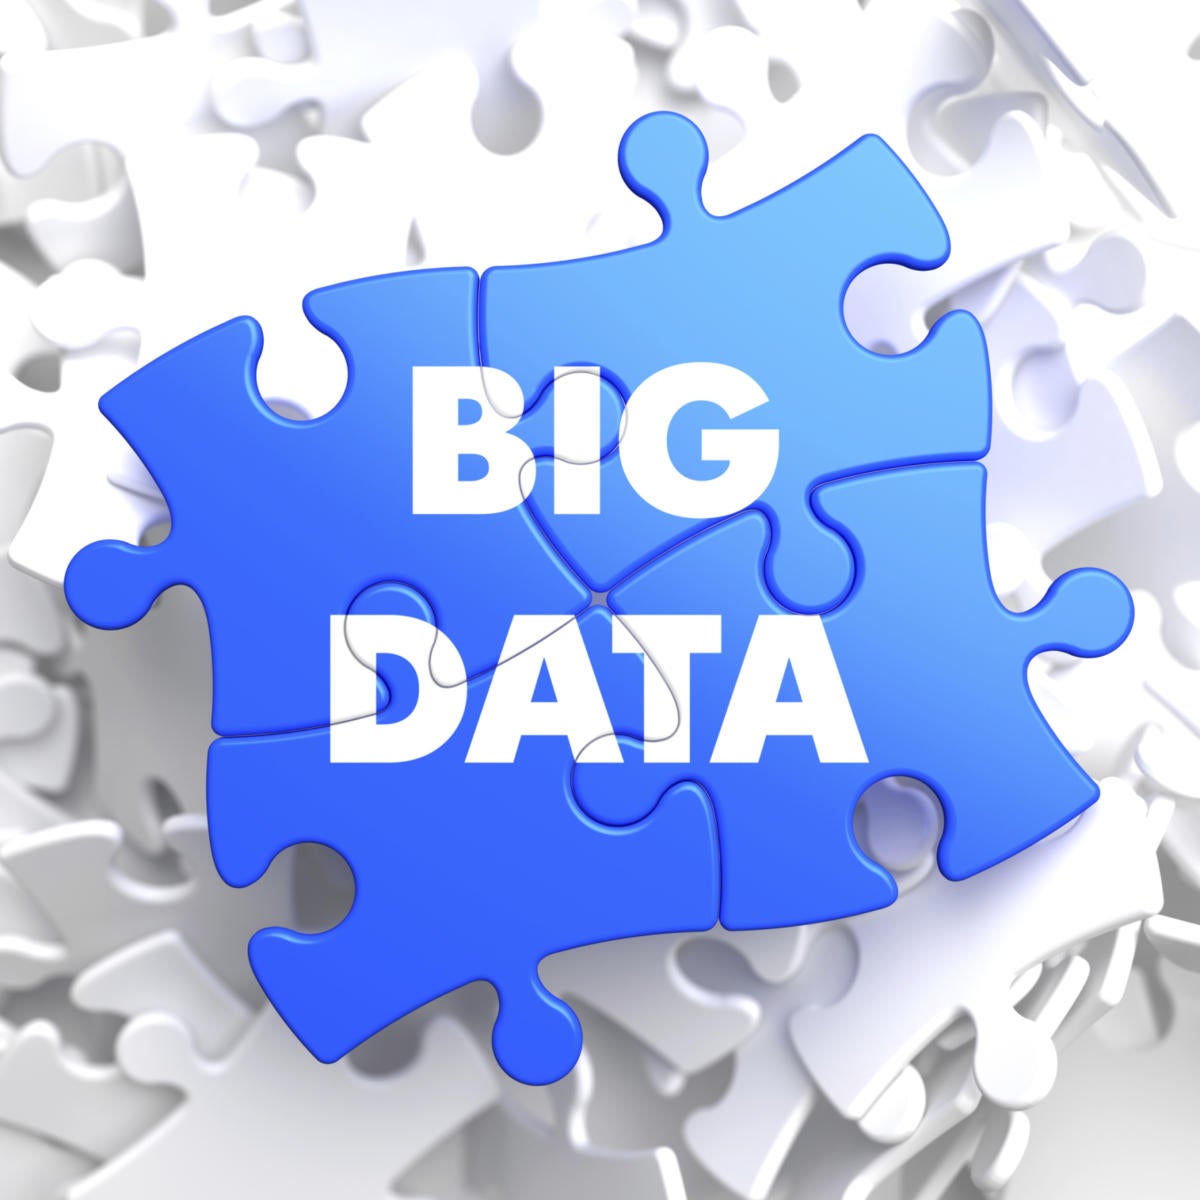 Businesses harbor big data desires, but lack know-how